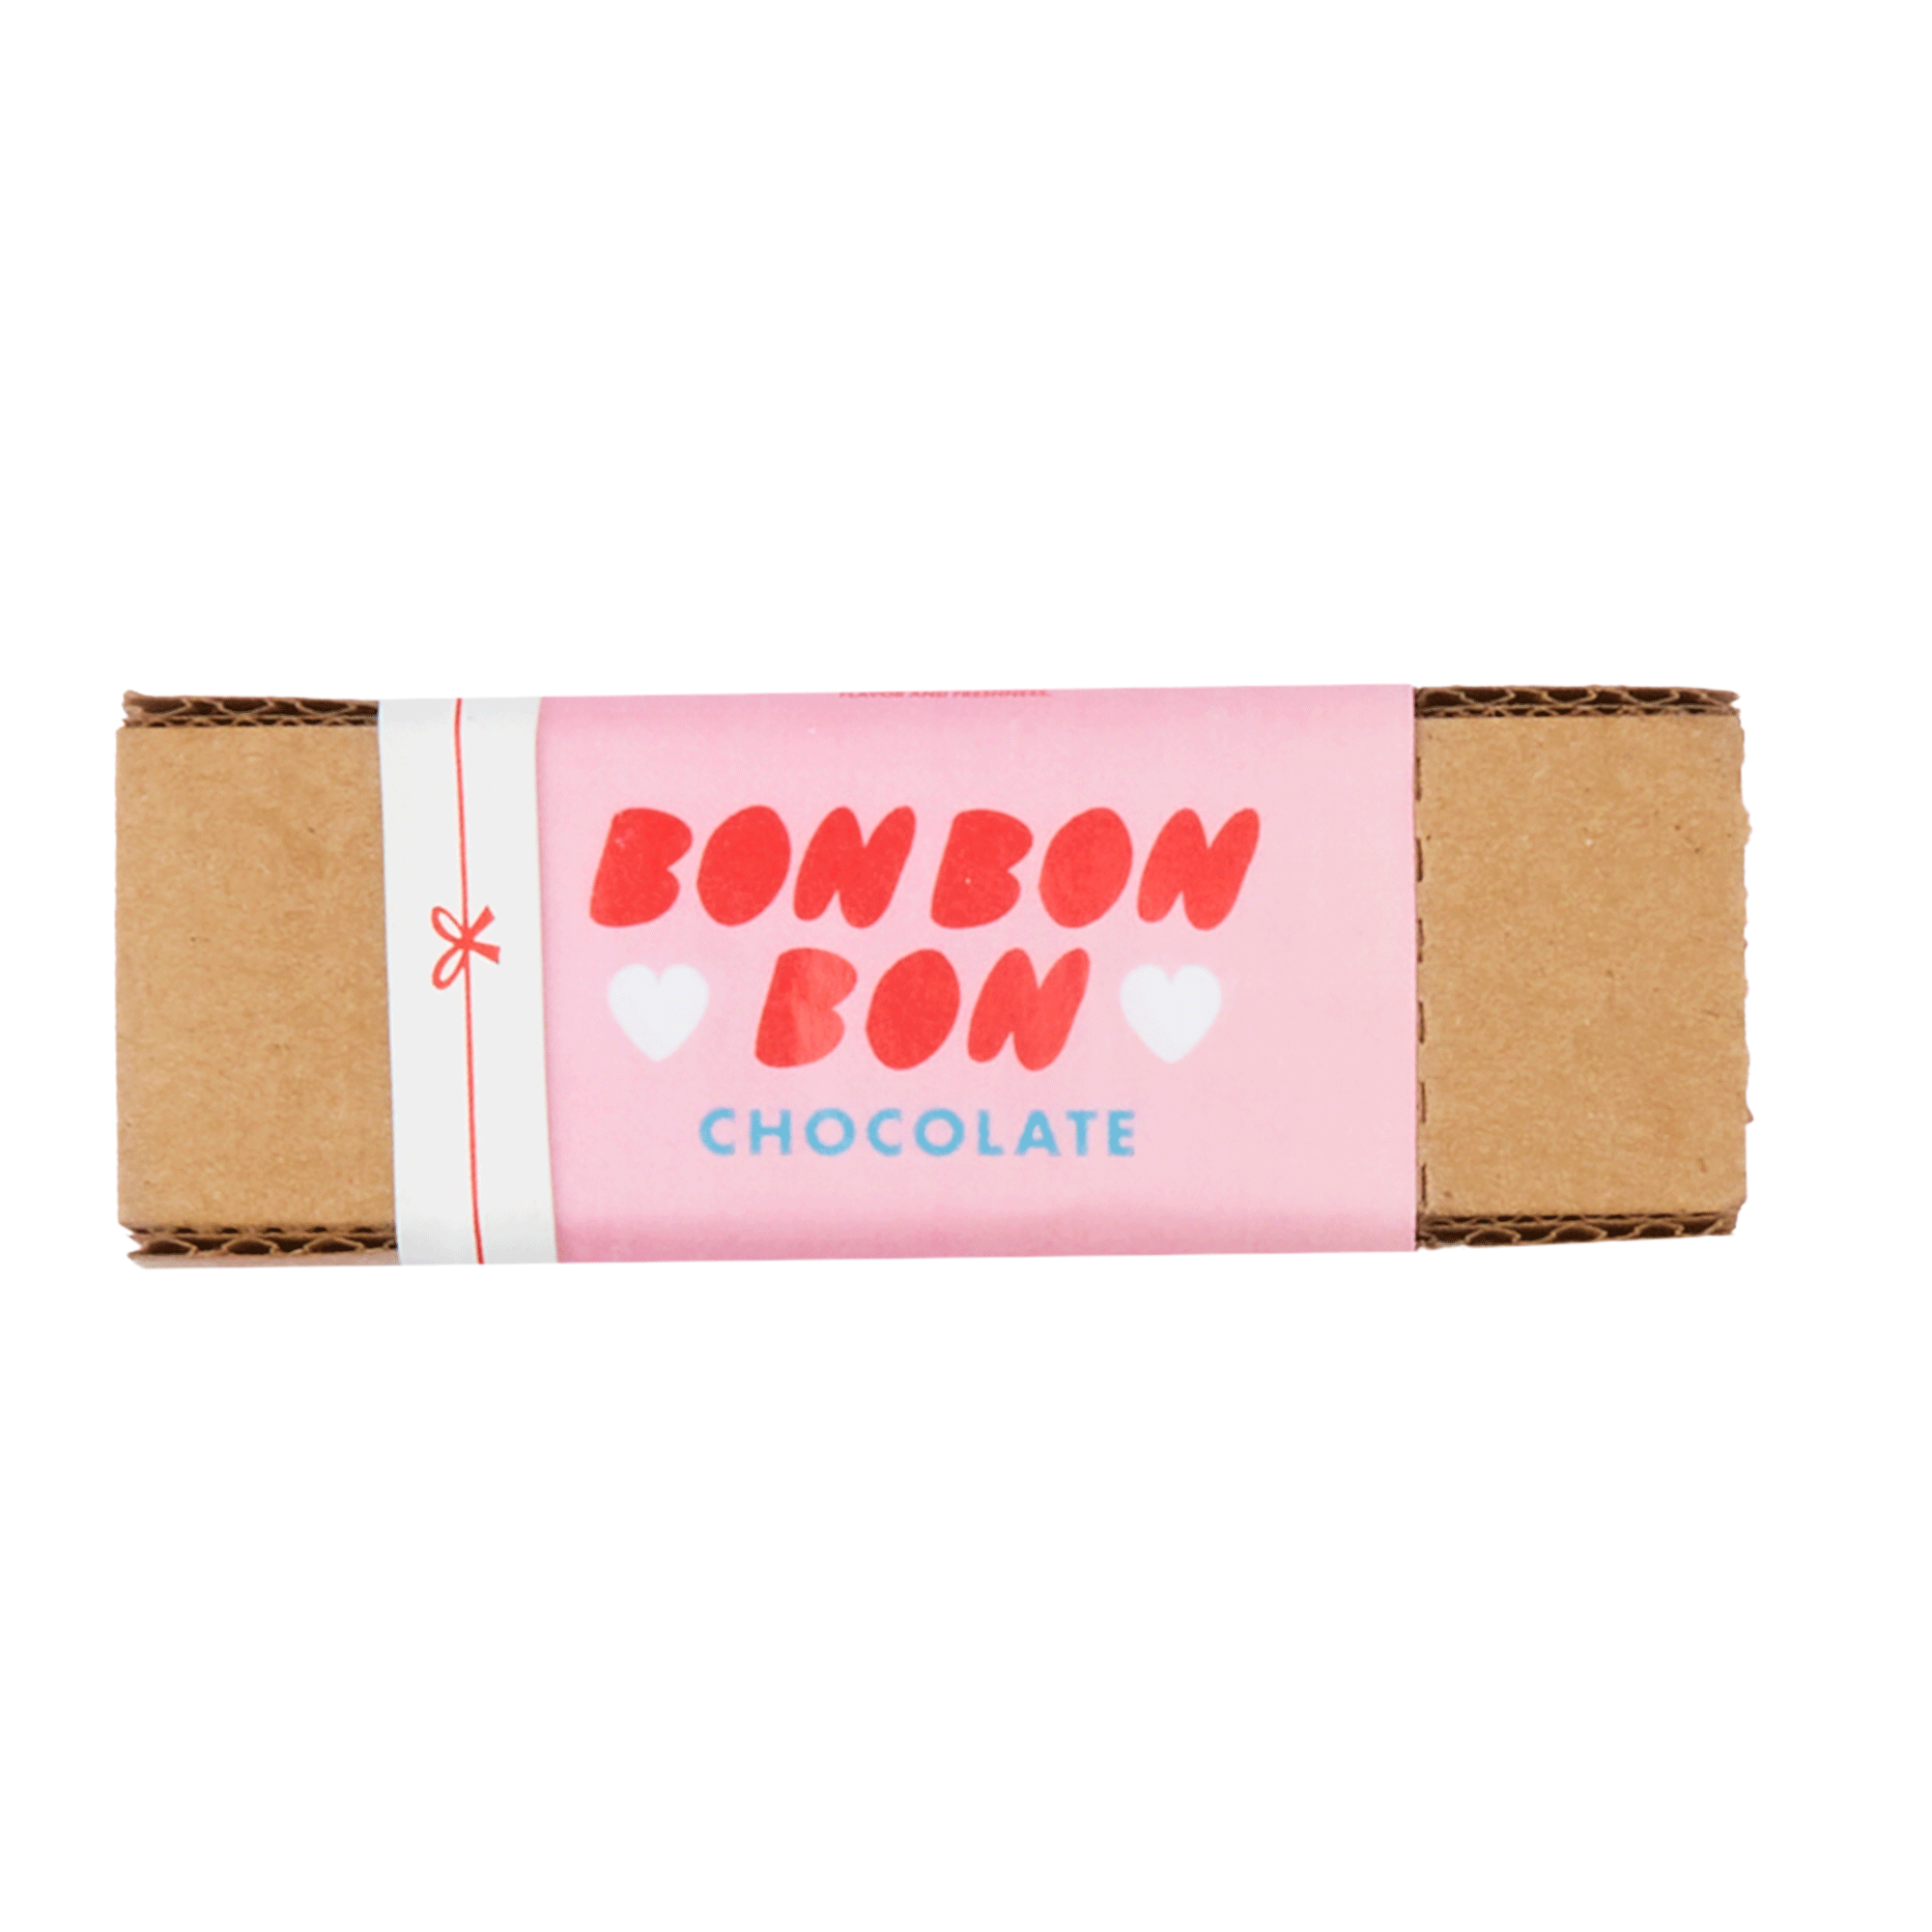 BON O BON TRADITIONAL CHOCOLATE EAGLE AND WHITE CHOCOLATE - 3 BOXES